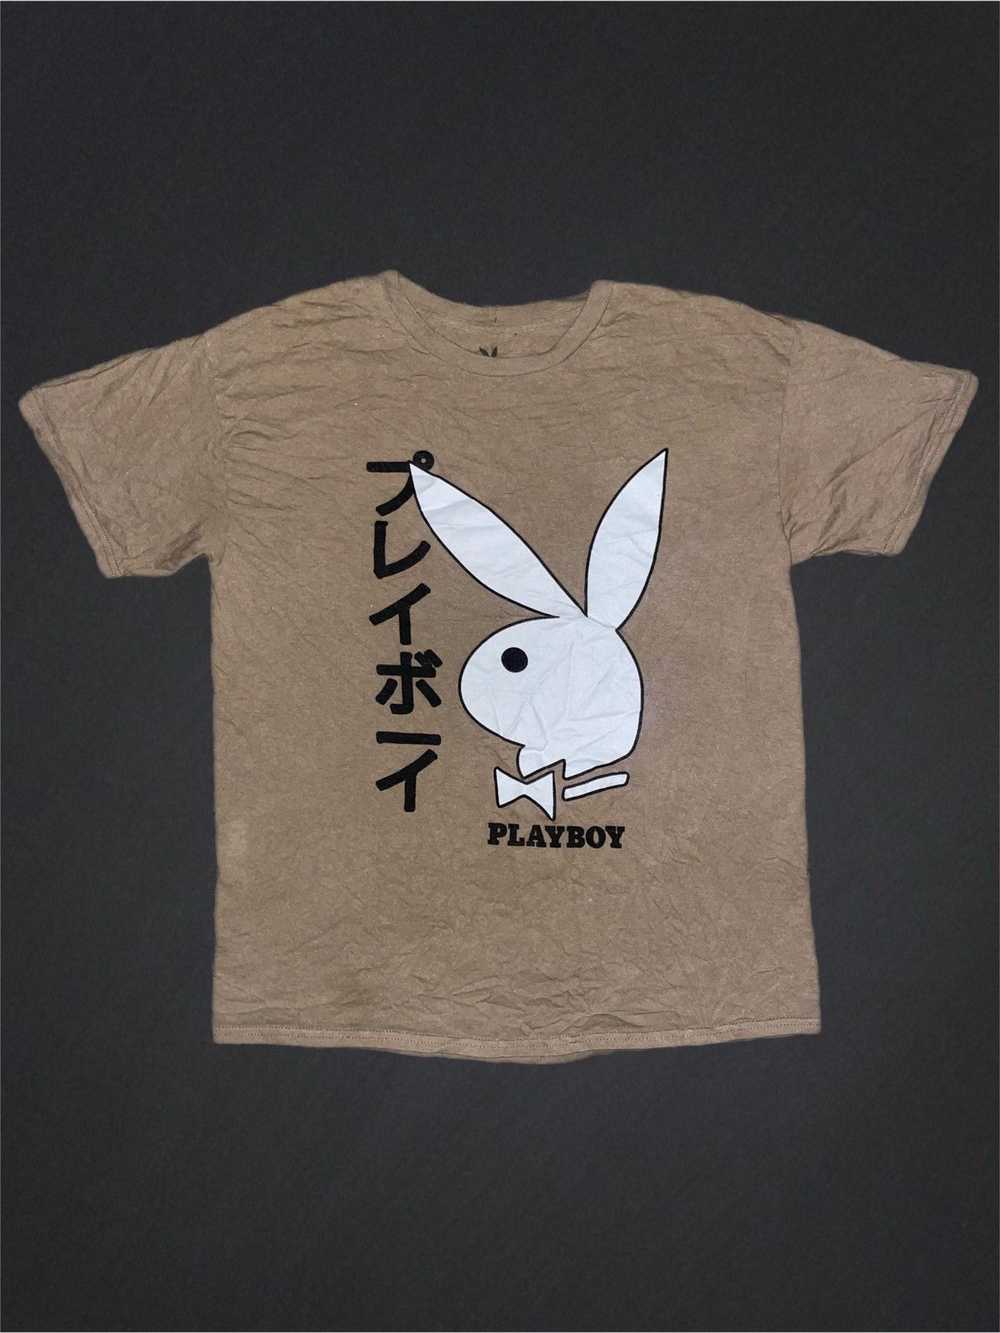 Playboy PLAYBOY Graphic Crewneck T-Shirt - image 1